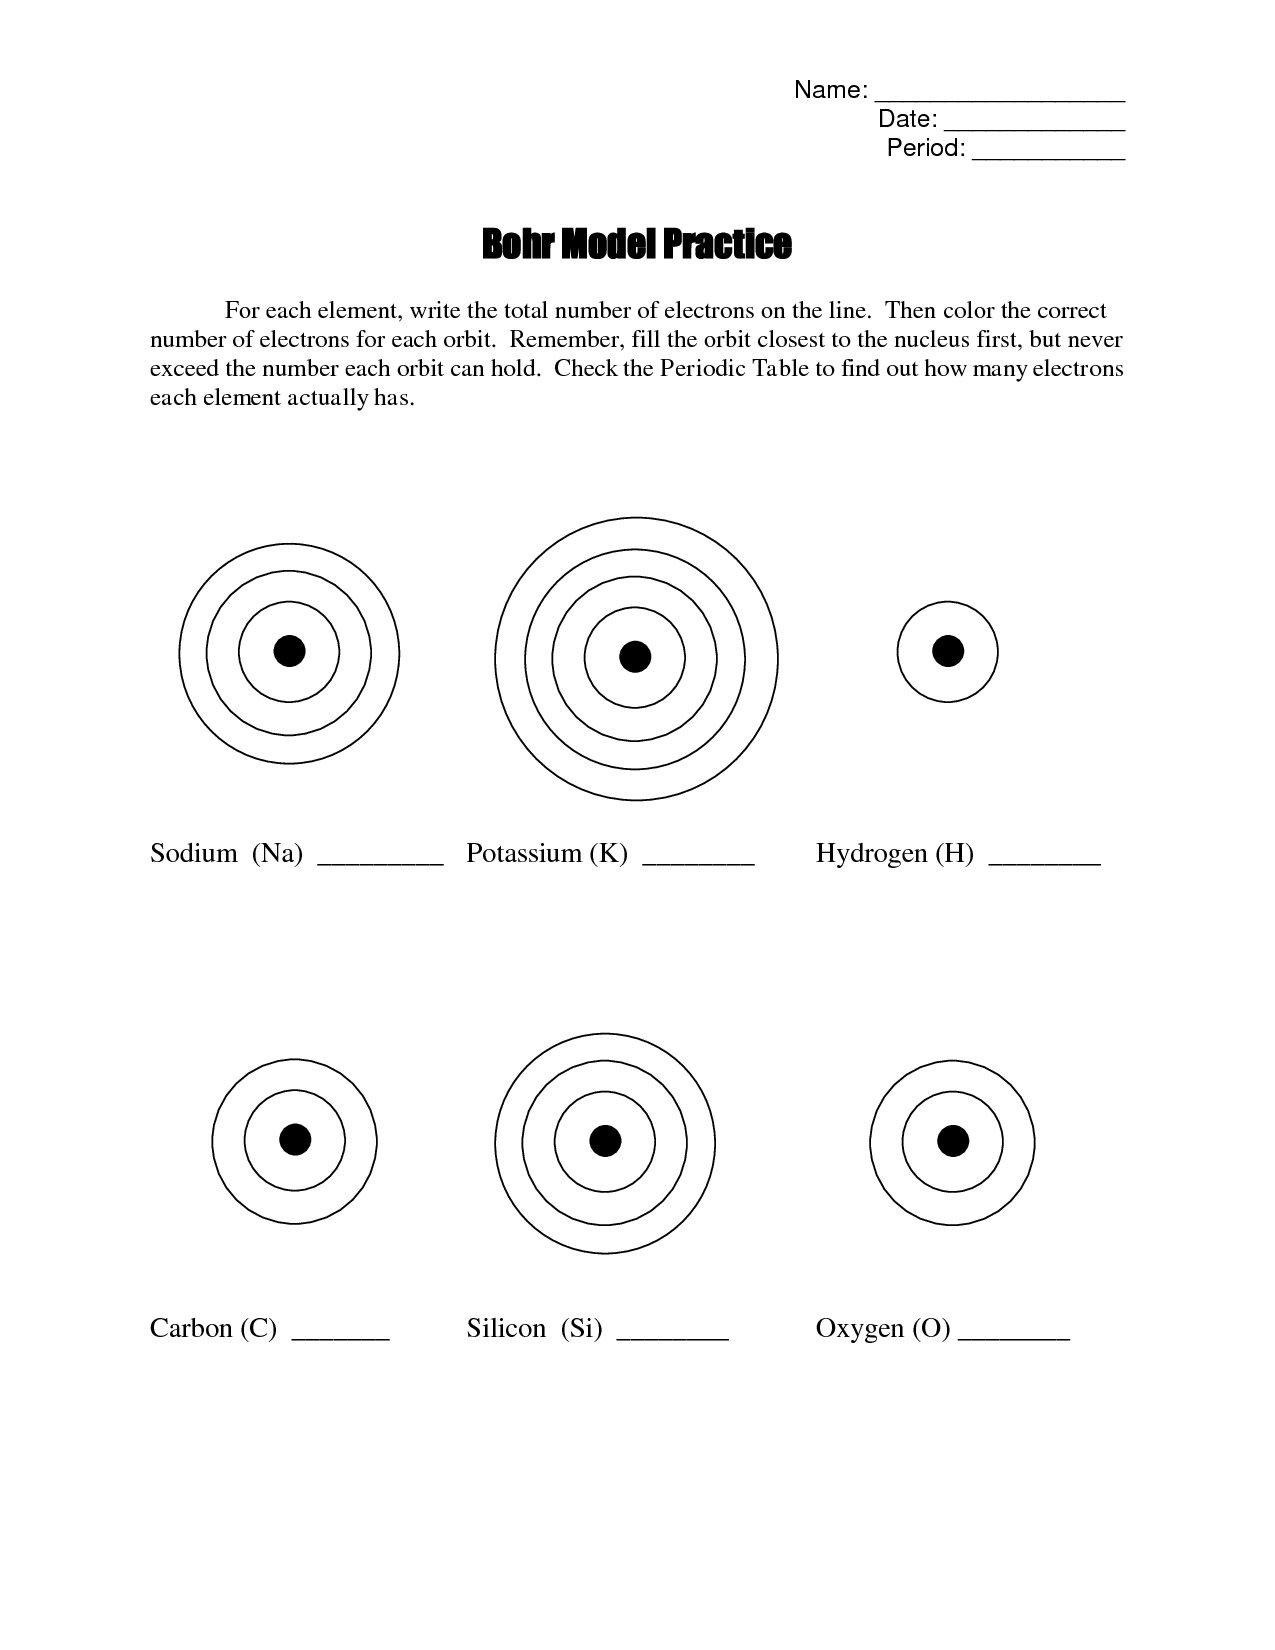 Bohr Model Worksheet Answers Image